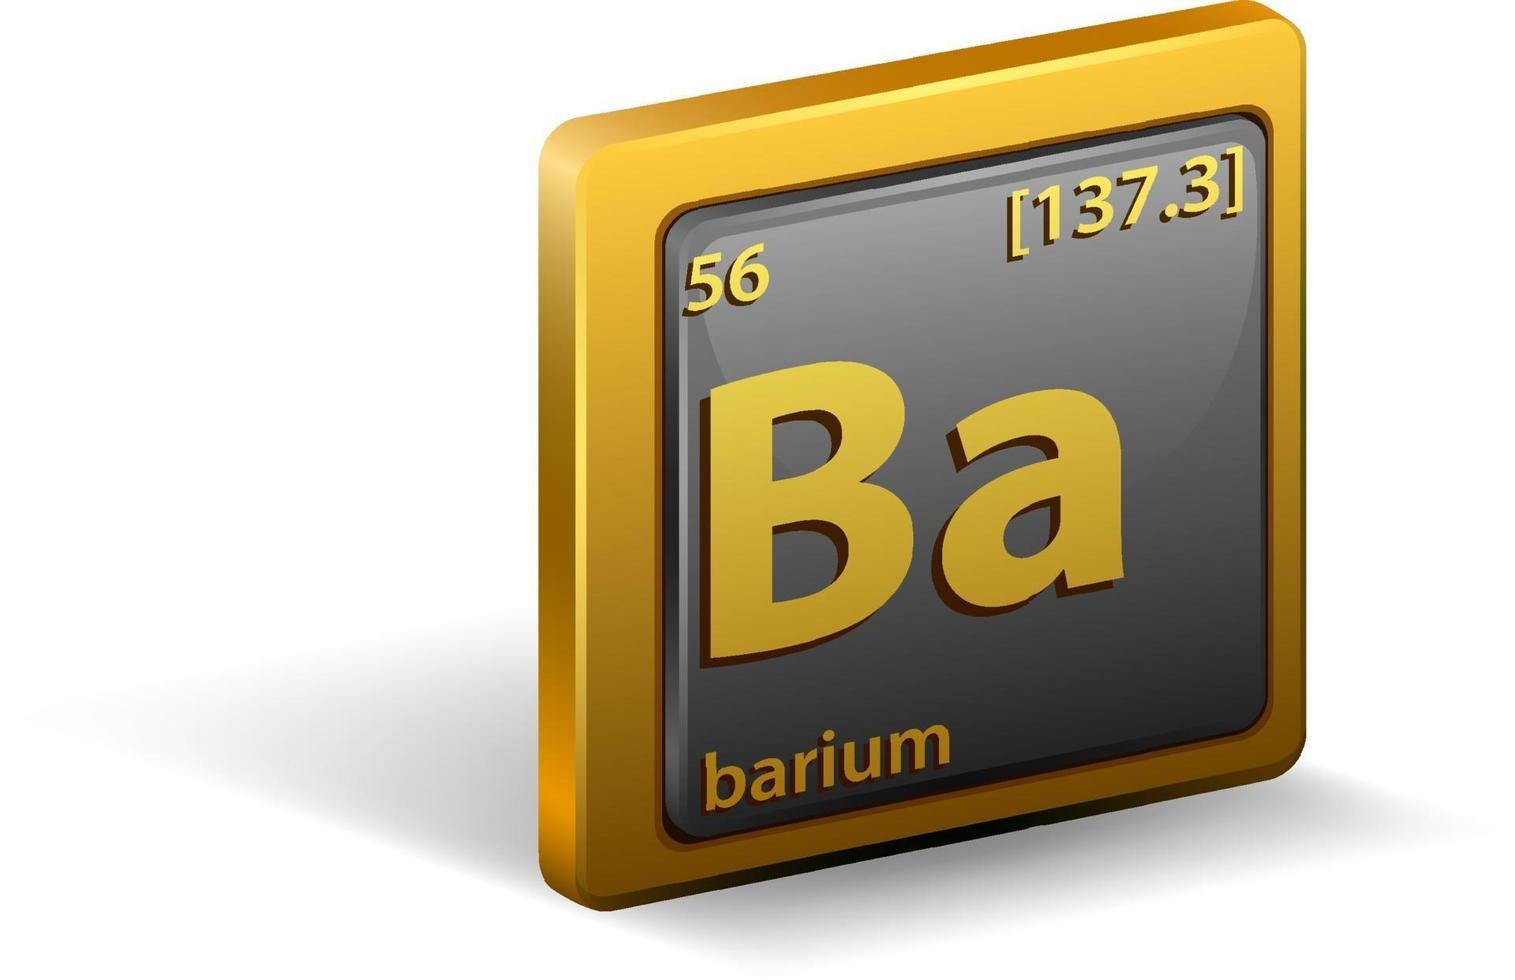 barium scheikundig element. chemisch symbool met atoomnummer en atoommassa. vector